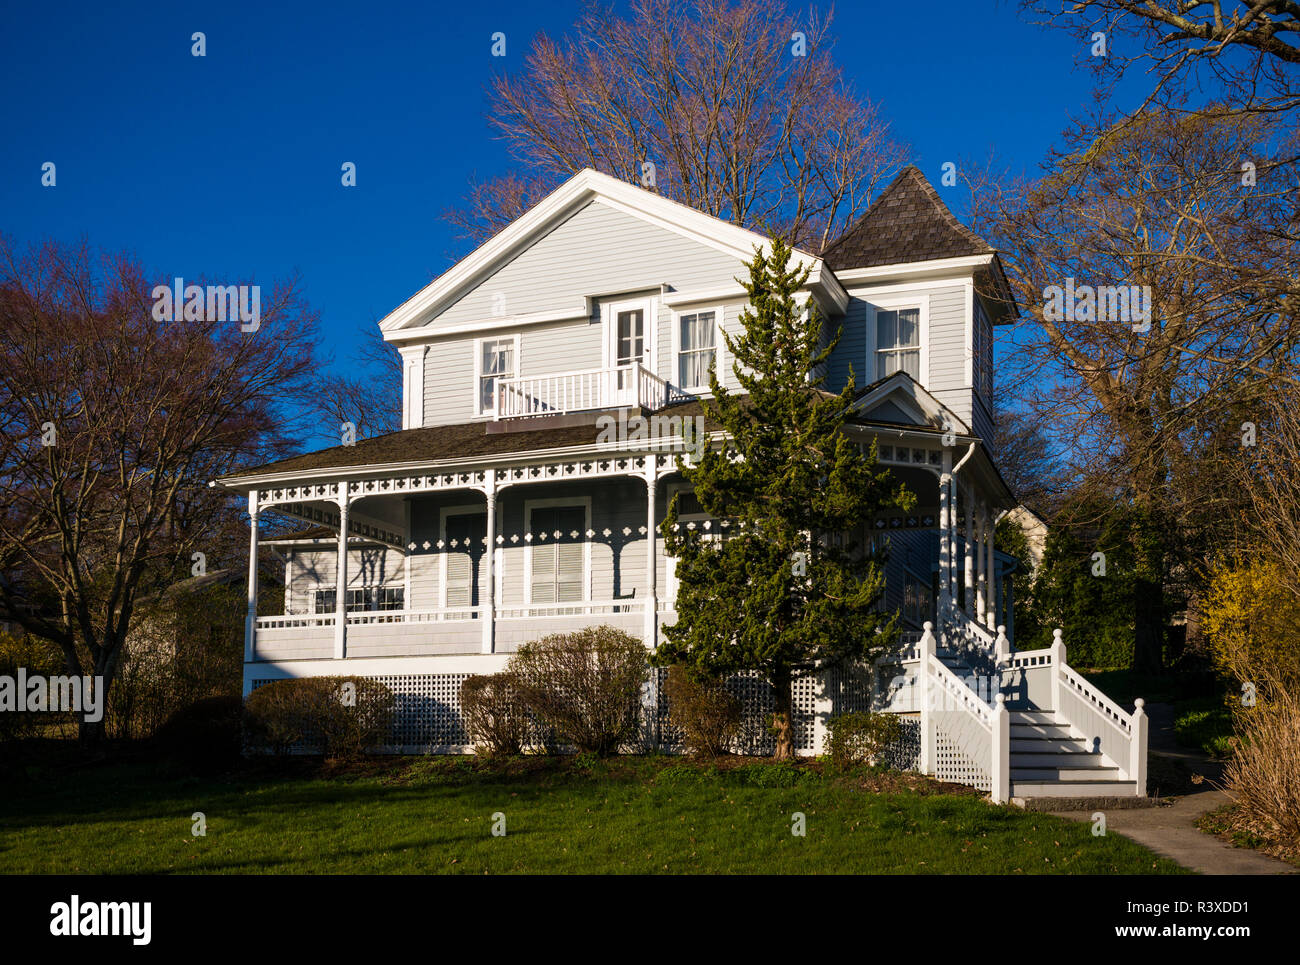 Usa Connecticut New London Monte Cristo Cottage Boyhood Home